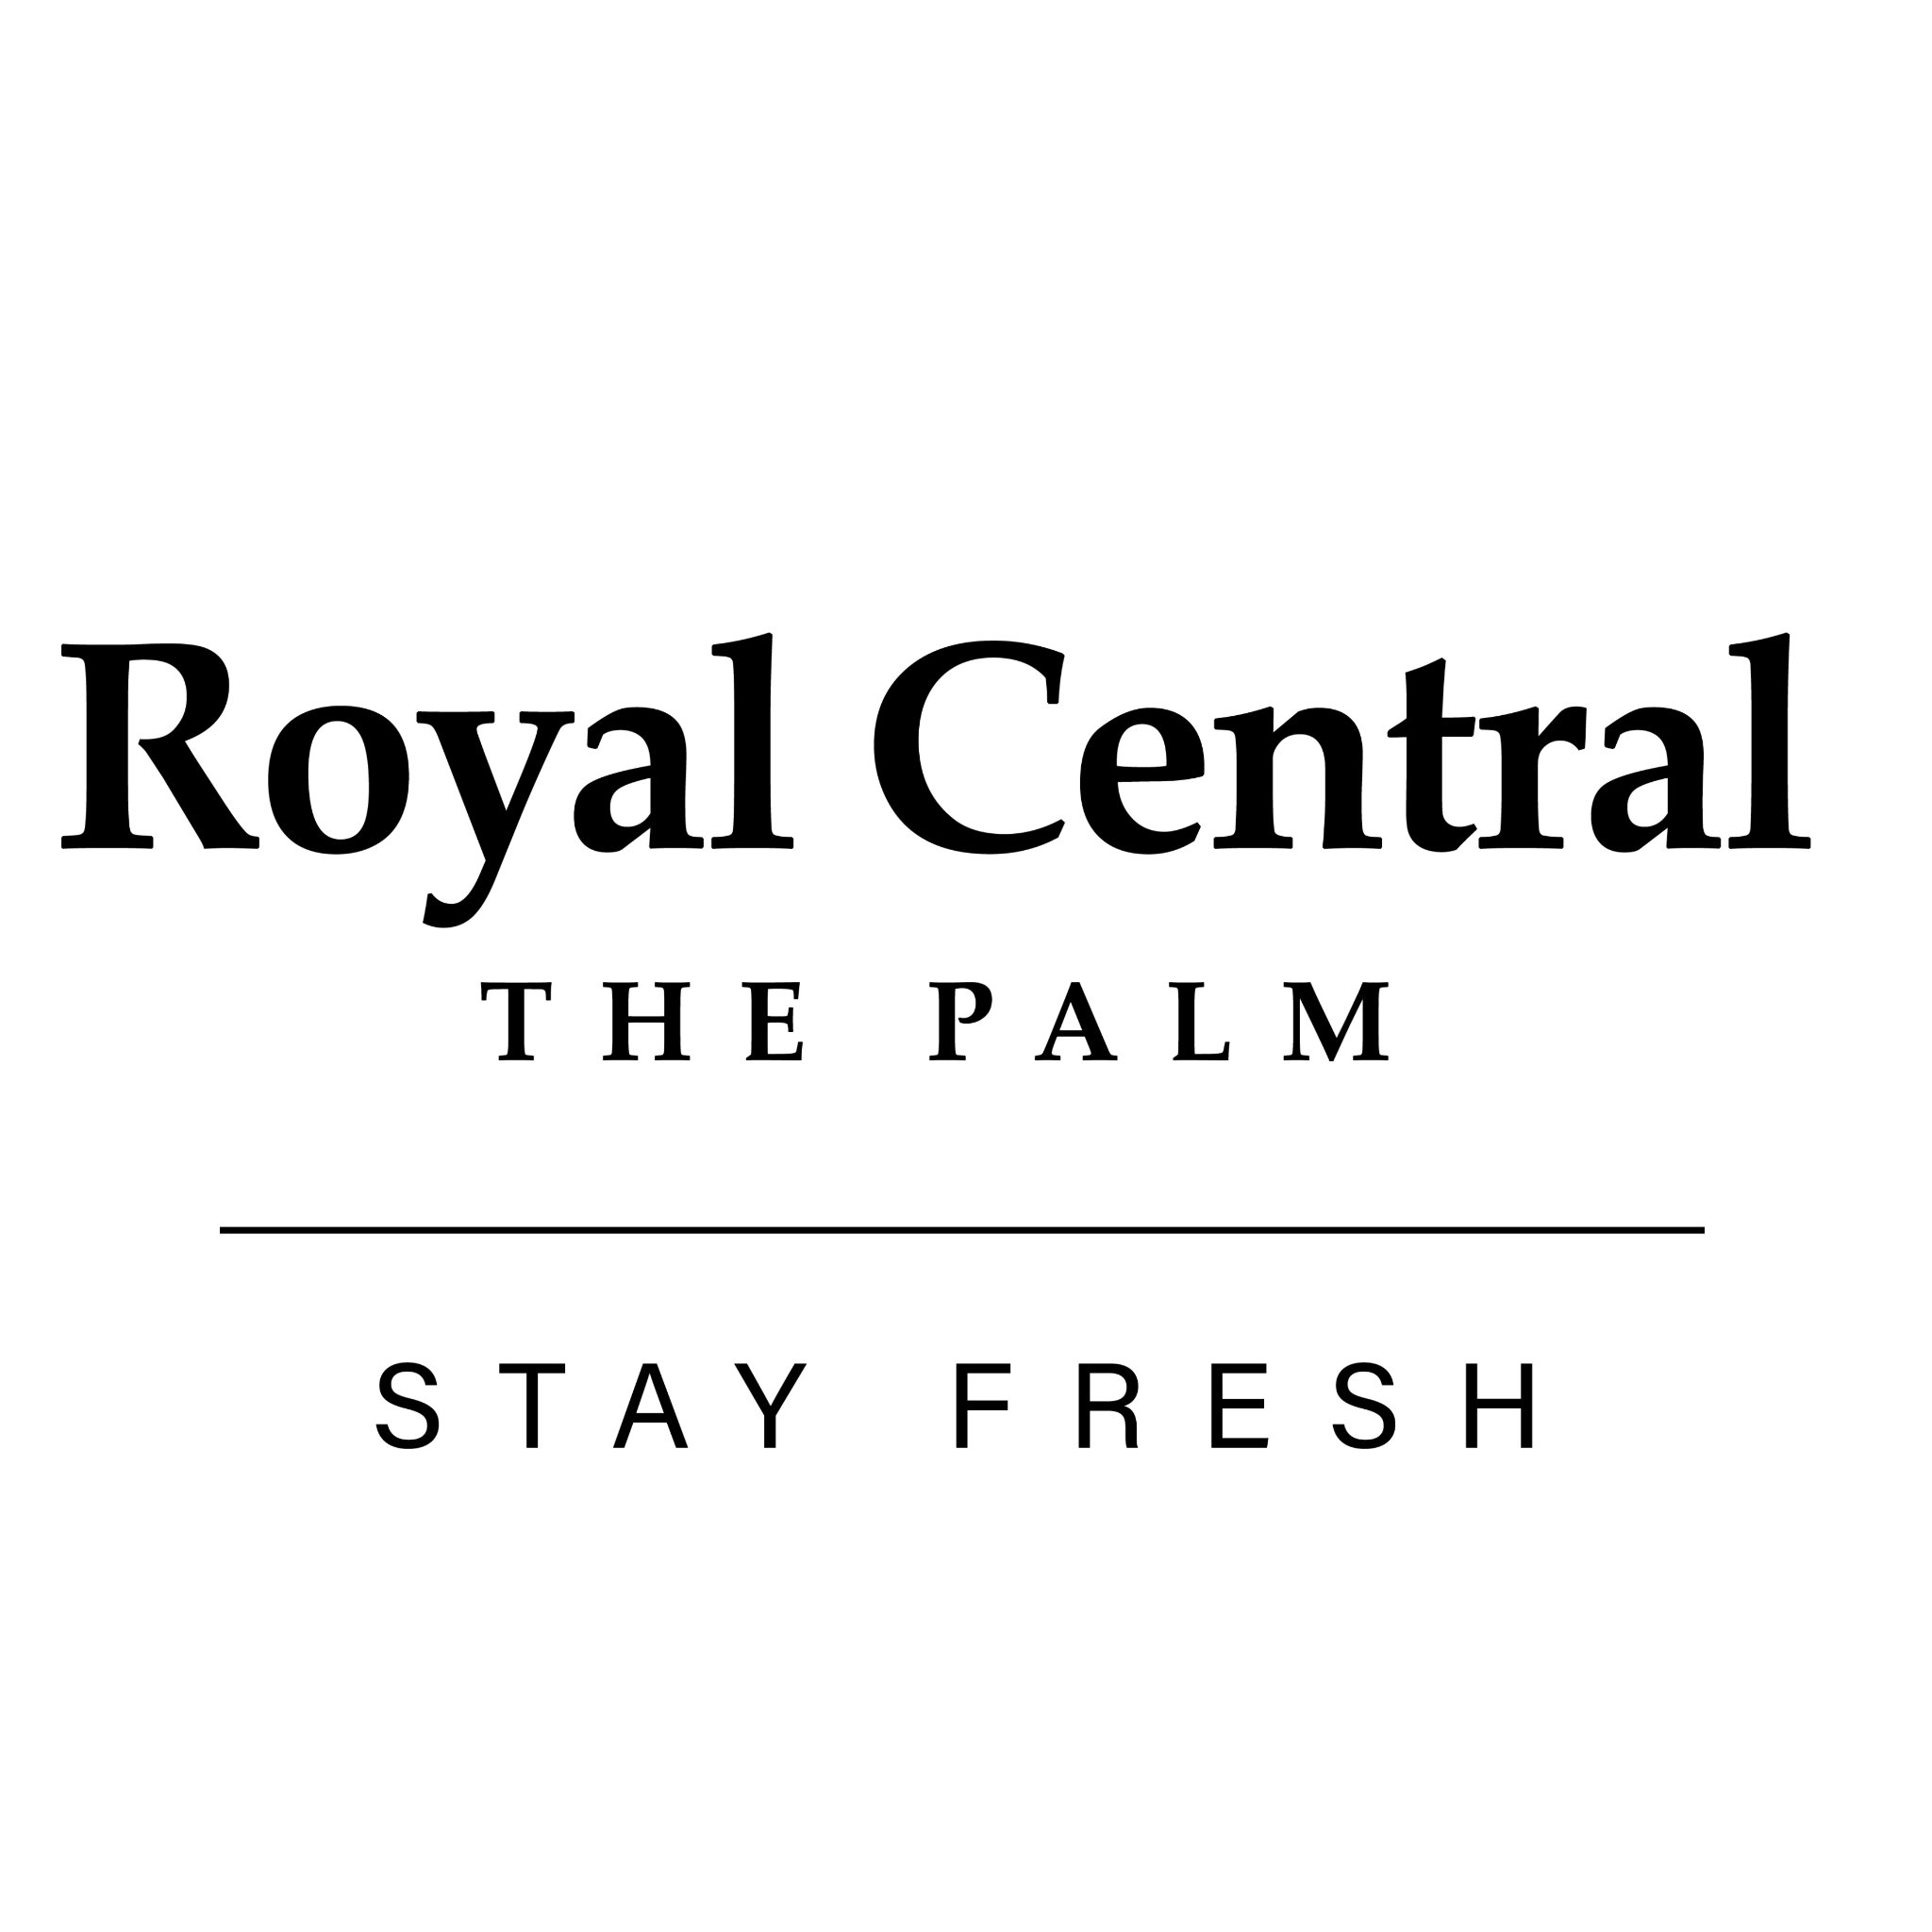 Royal Central Hotel